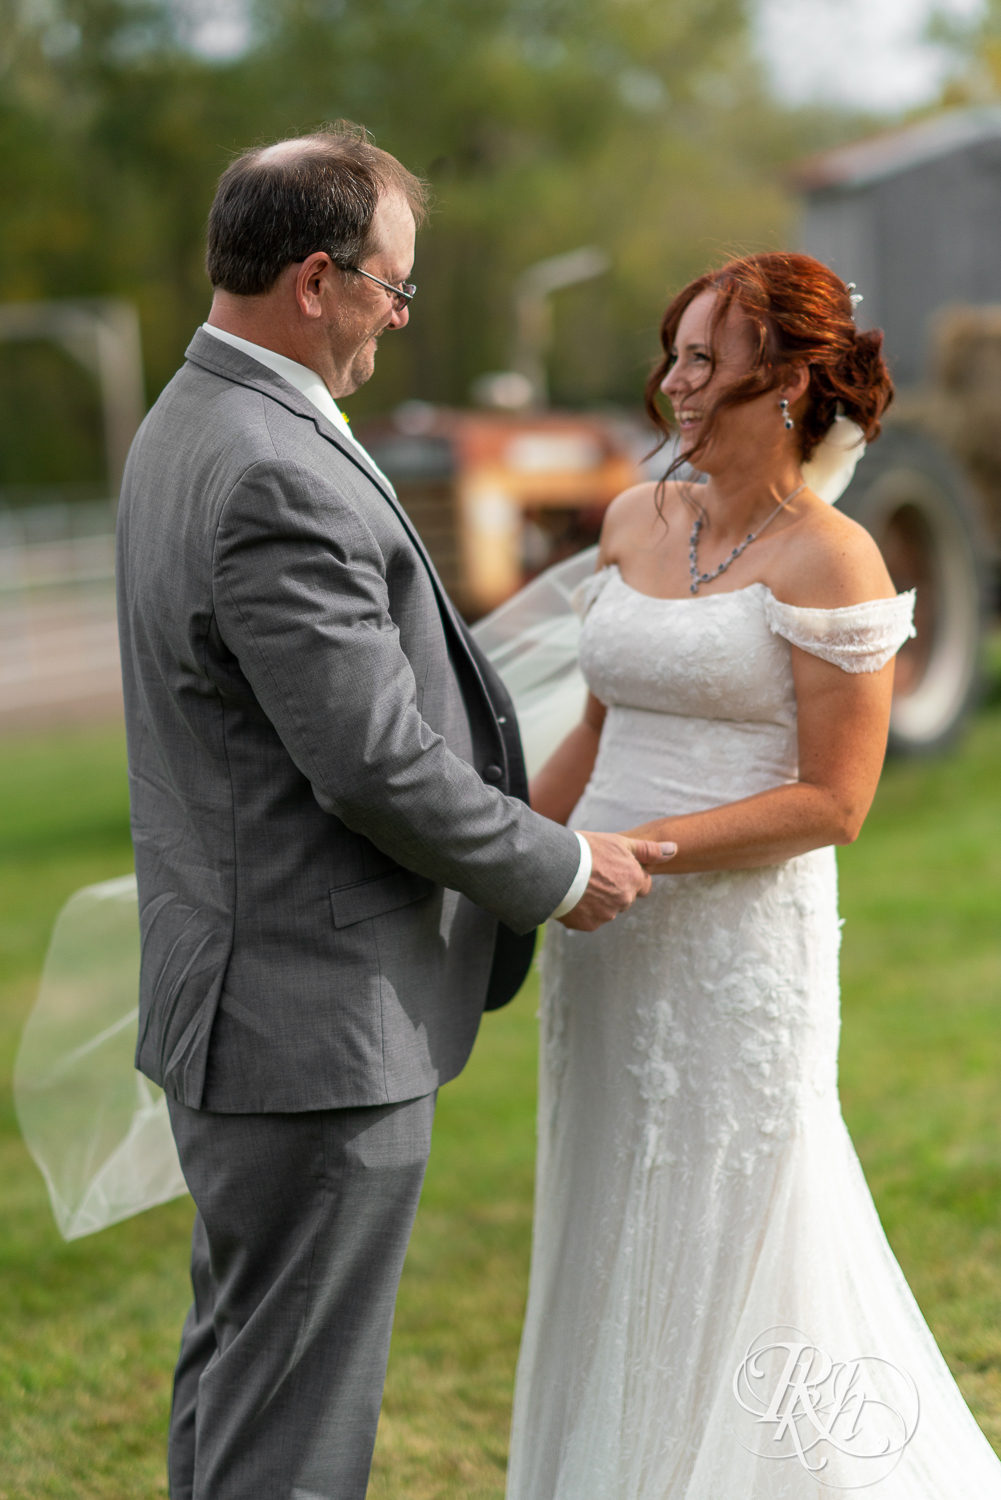 First look between bride and groom at Barn at Crocker's Creek in Faribault, Minnesota.